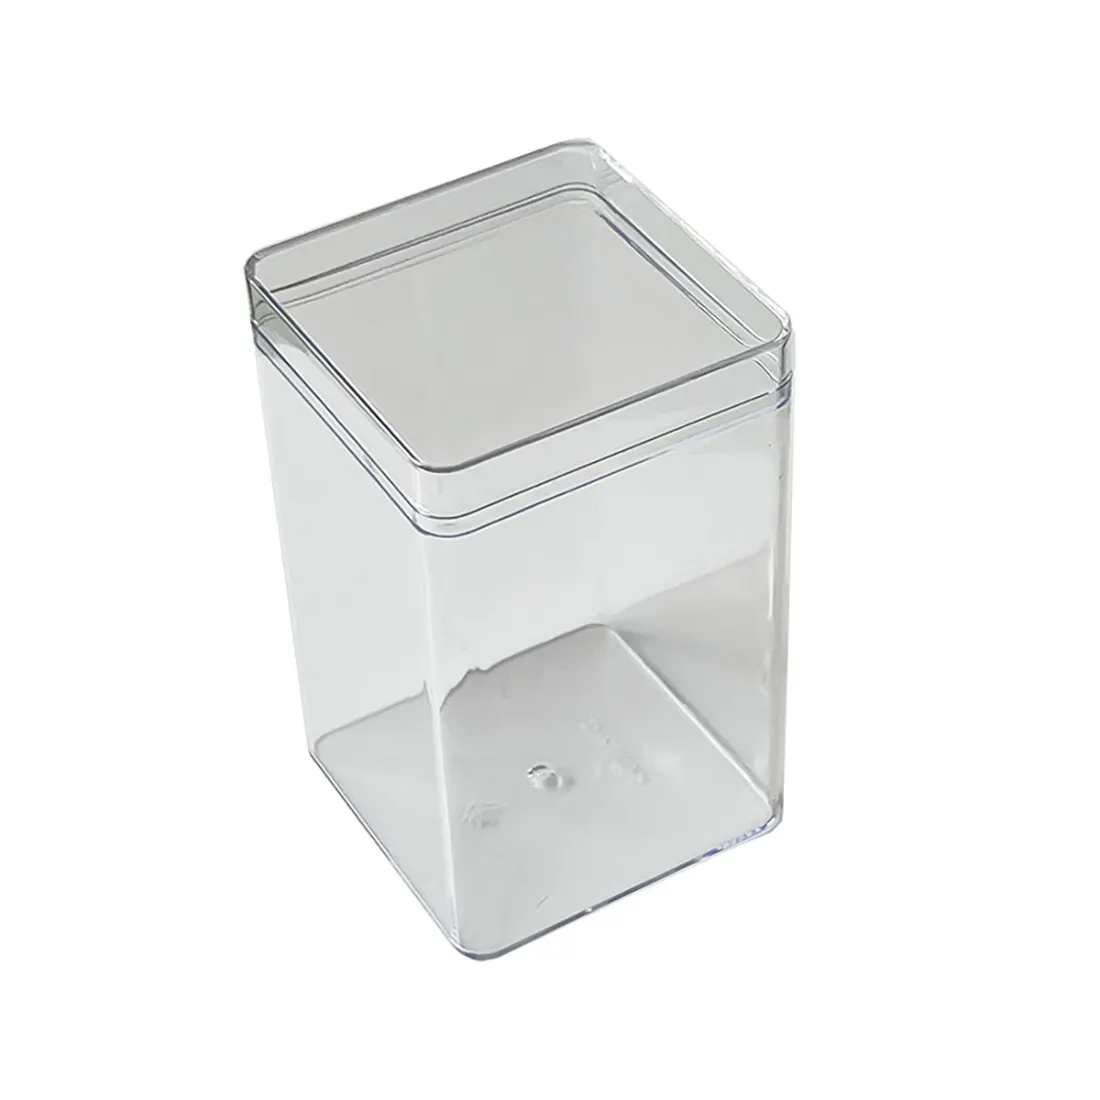 Boa qualidade 003 grandes caixas acrílicas para presentes Cubo Food Packing Caixa plástica Clear Plastic Cookie Jar